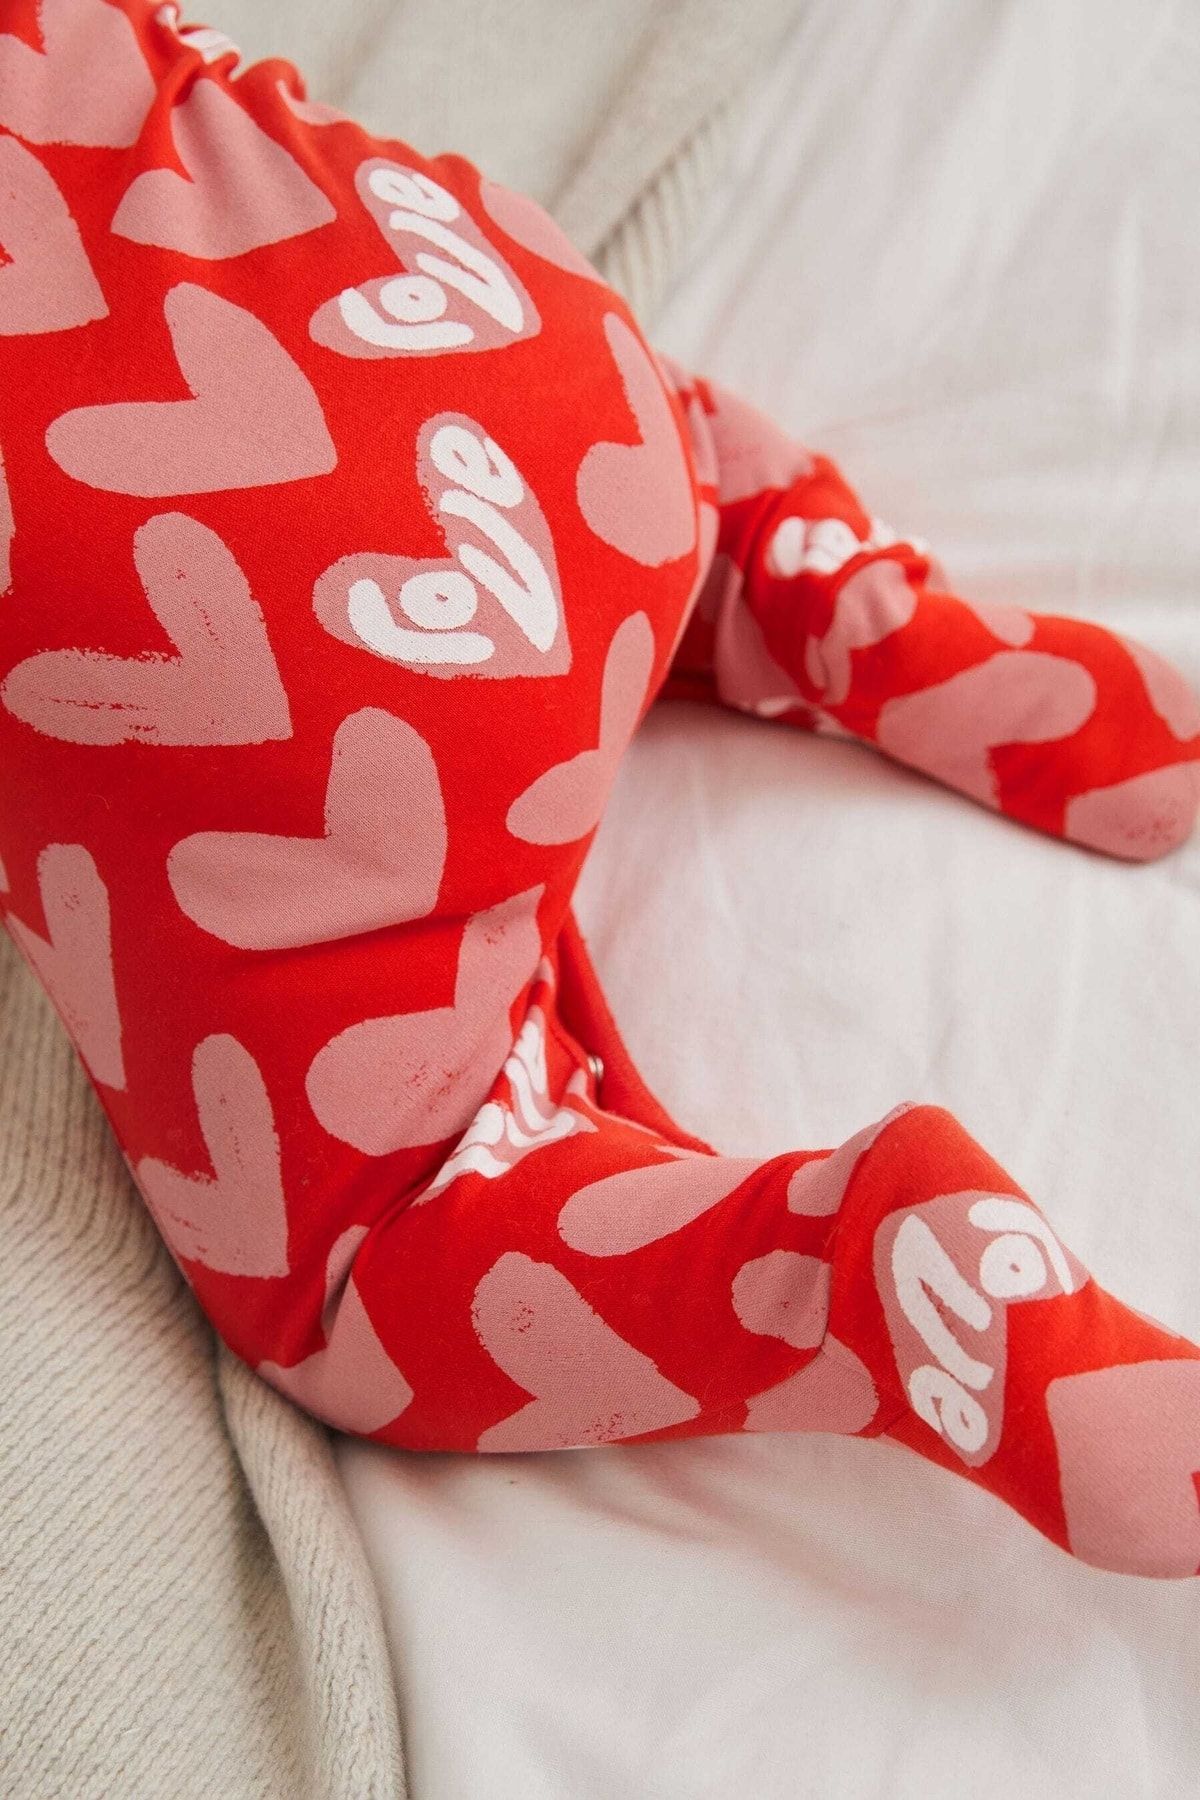 Next Baby کت و شلوار 100٪ پنبه ای ارگانیک قرمز-صورتی قلب